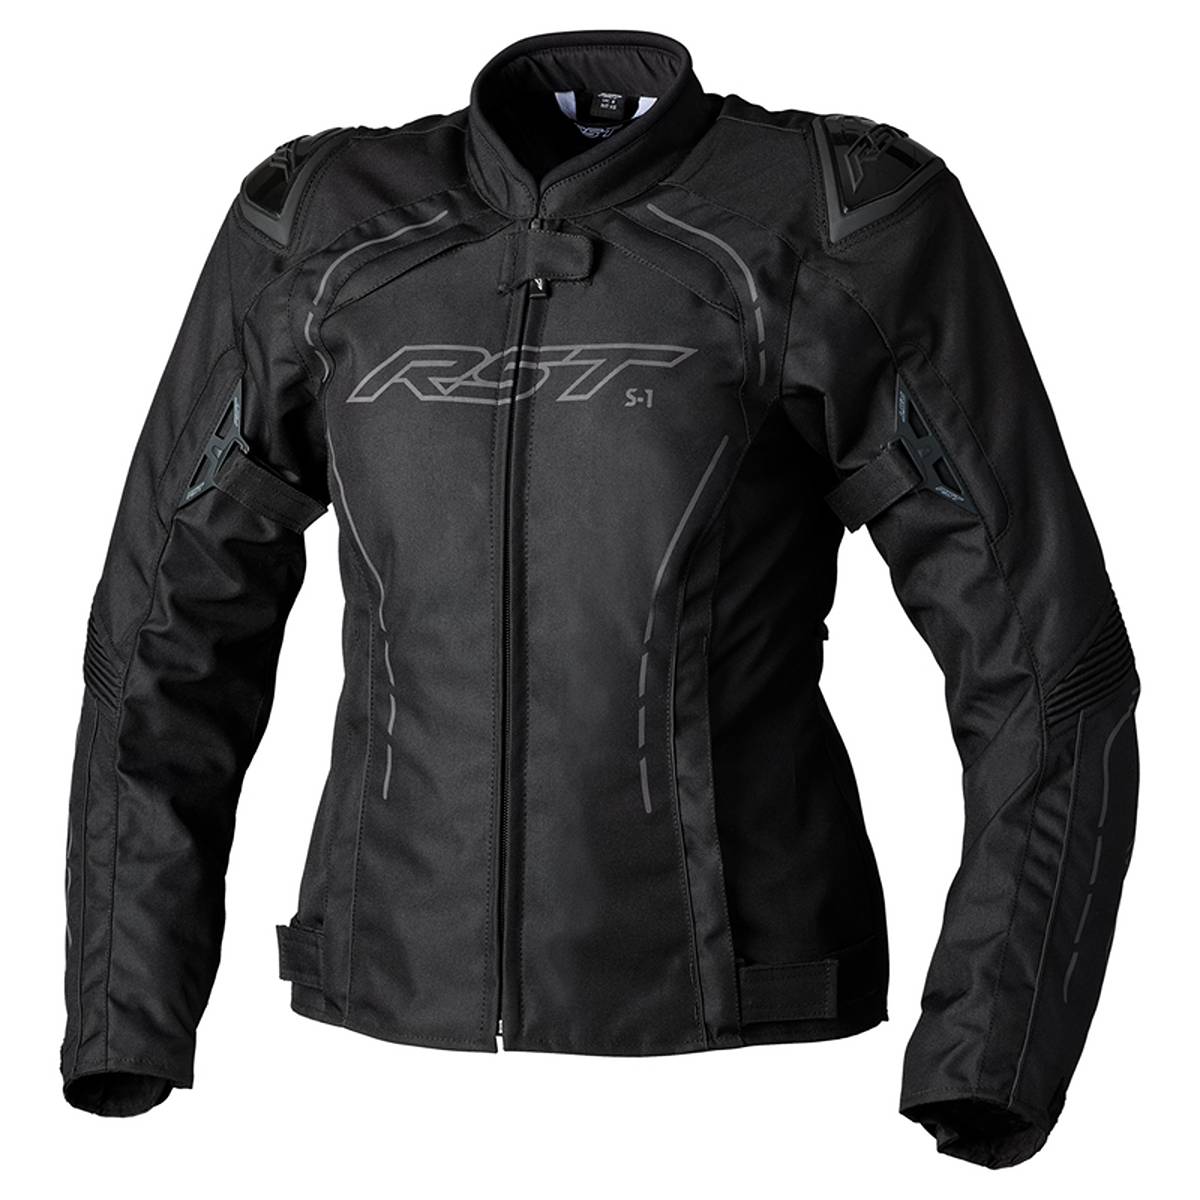 Image of RST S1 Ladies Textile Jacket Black Black Taille 20